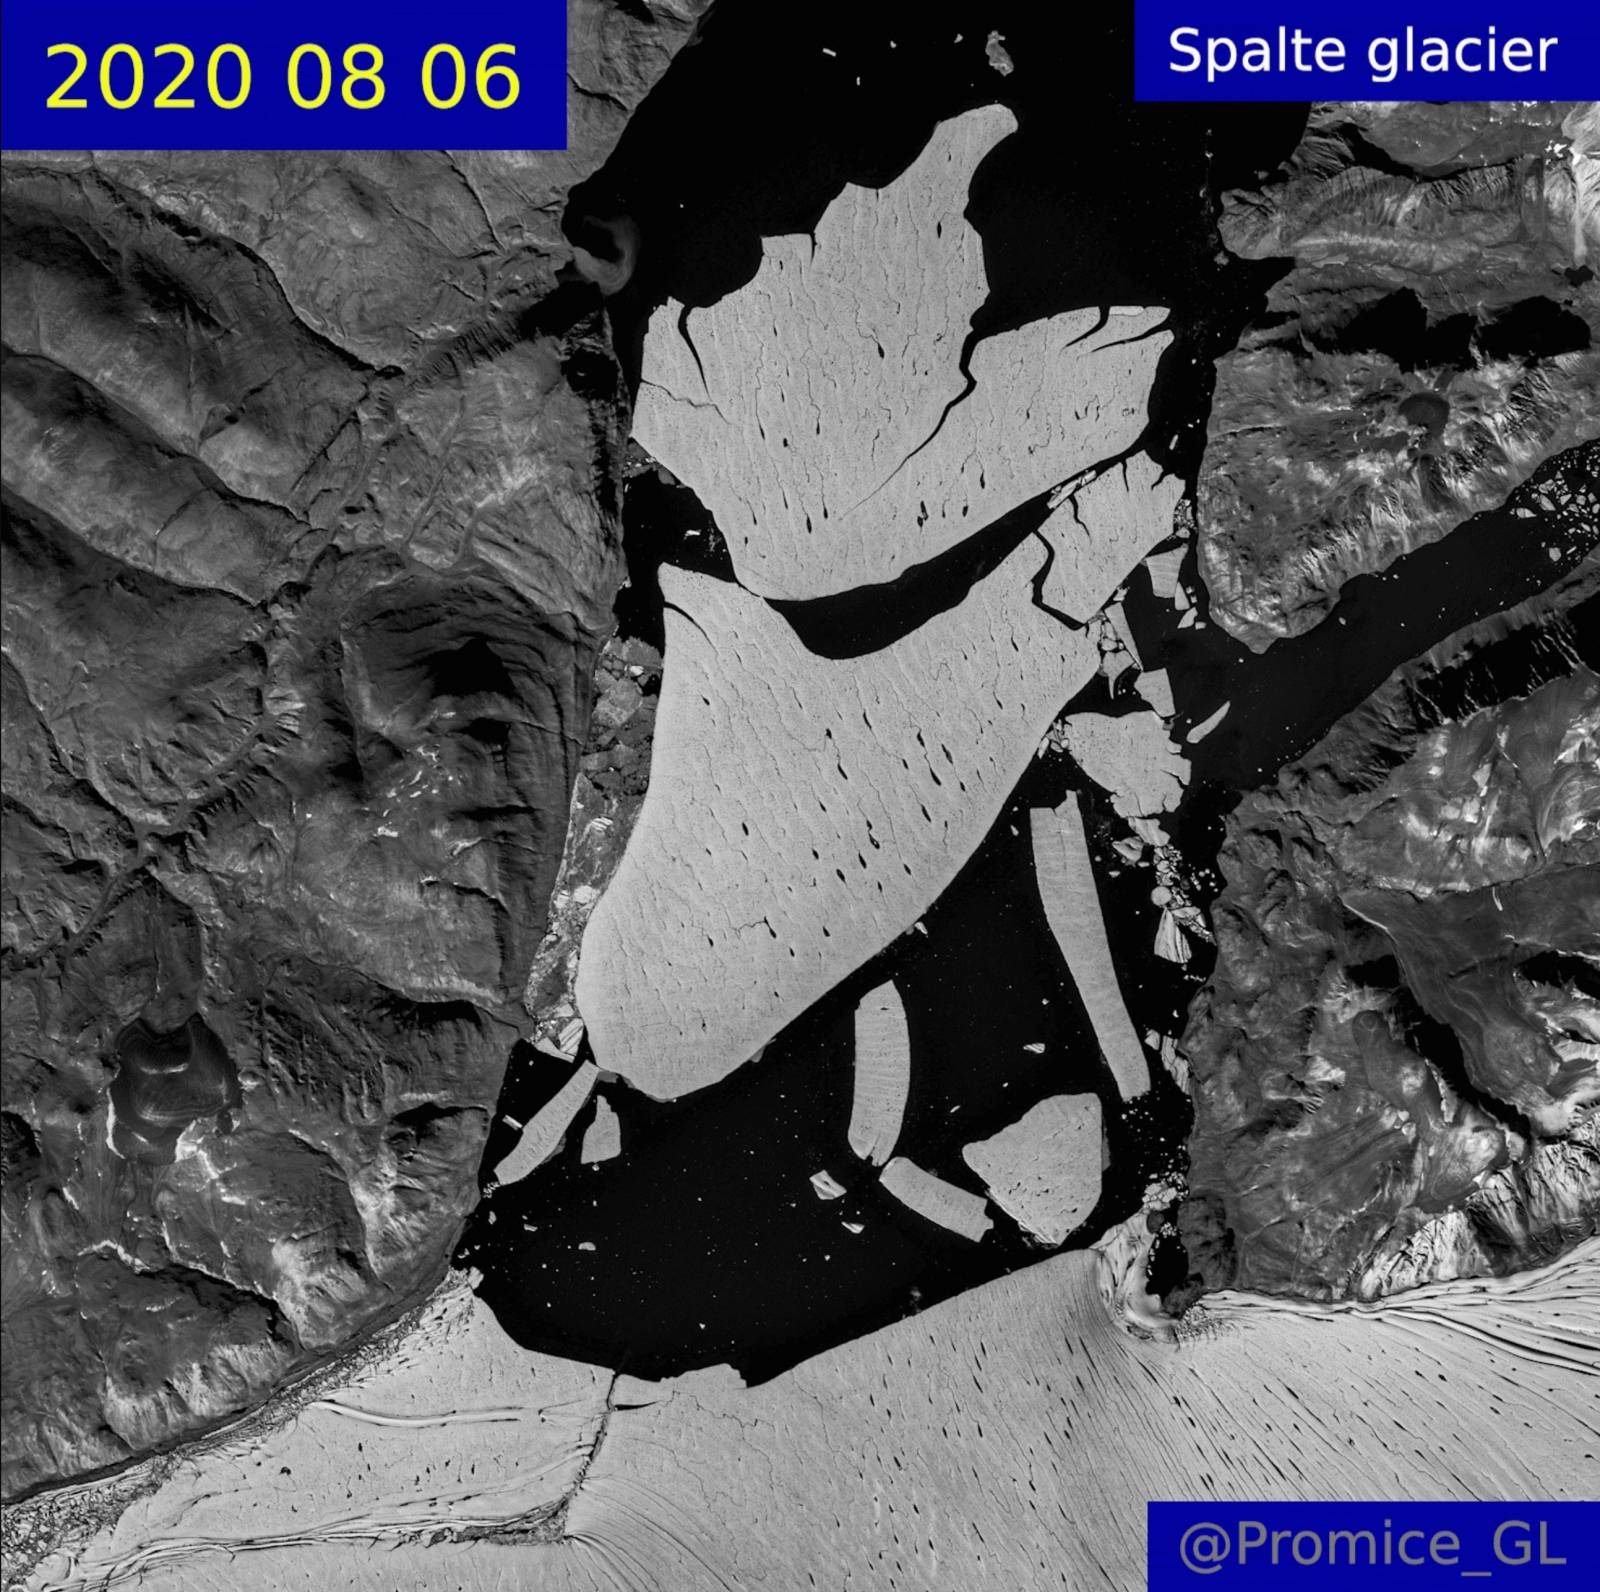 A satellite image shows the Spalte glacier in 2020